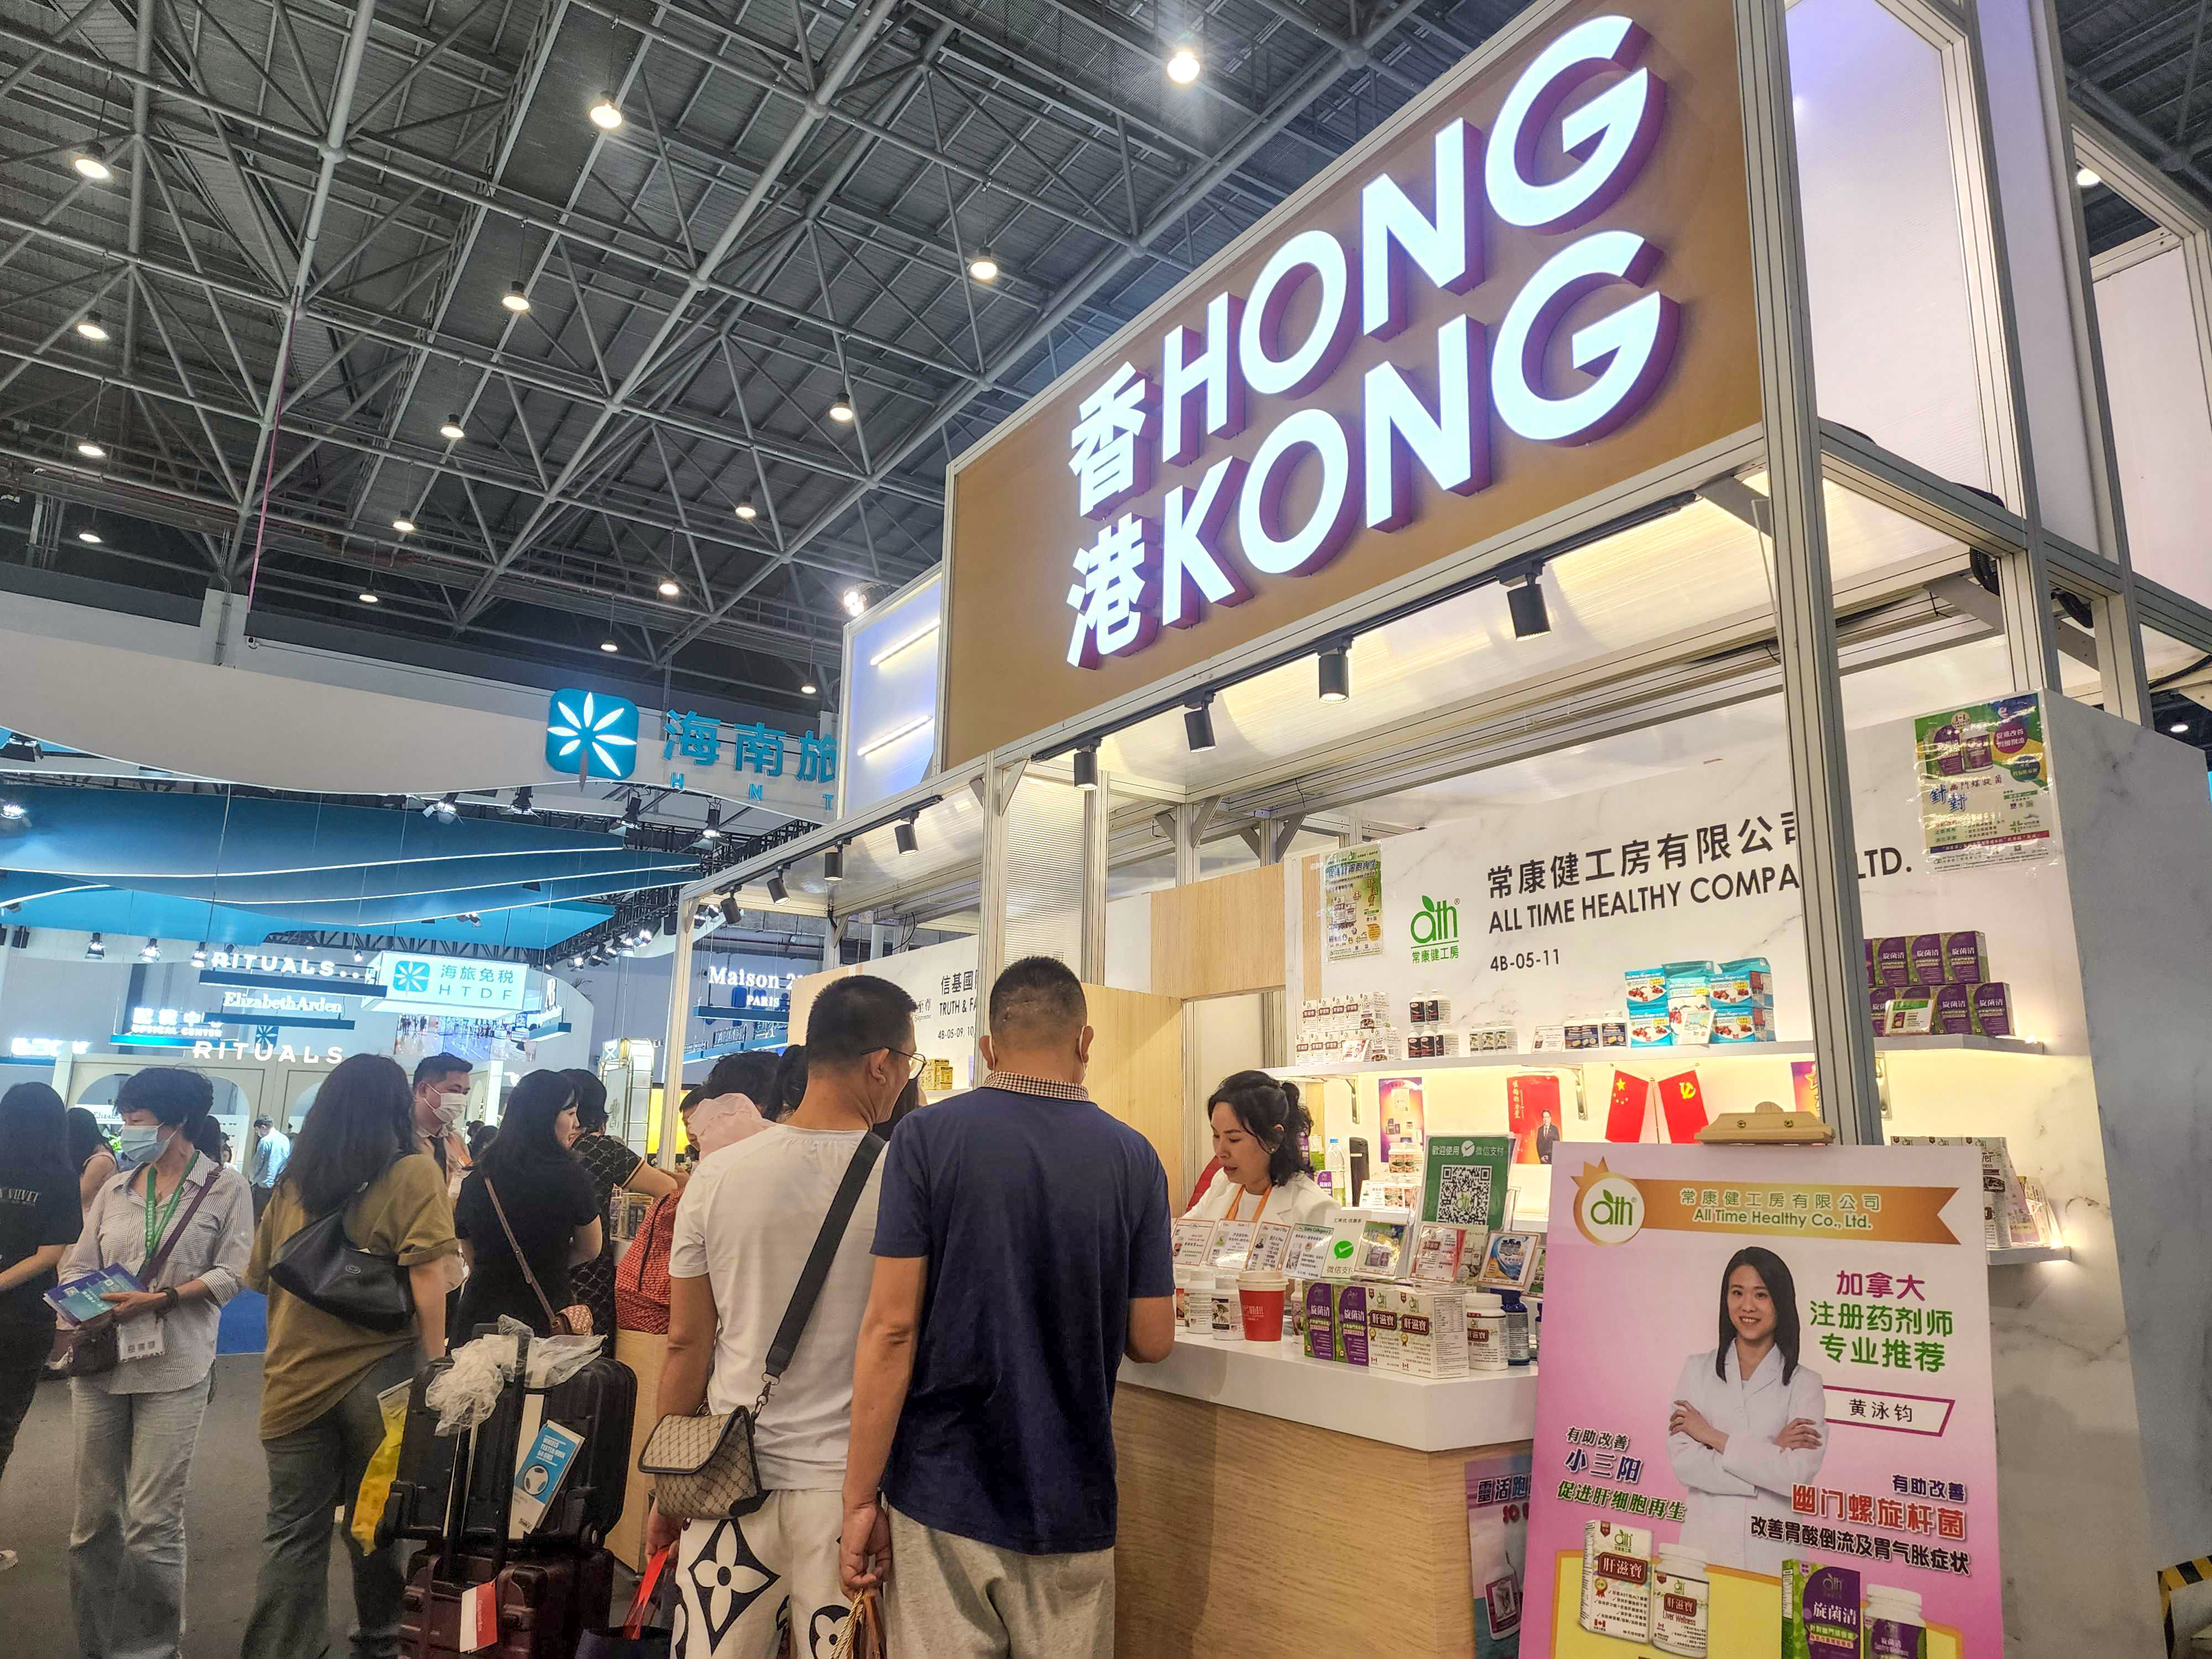 Hong Kong company All Time Healthy showcases its products at the China International Consumer Products Expo in Hainan on April 13. Photo: Iris Ouyang